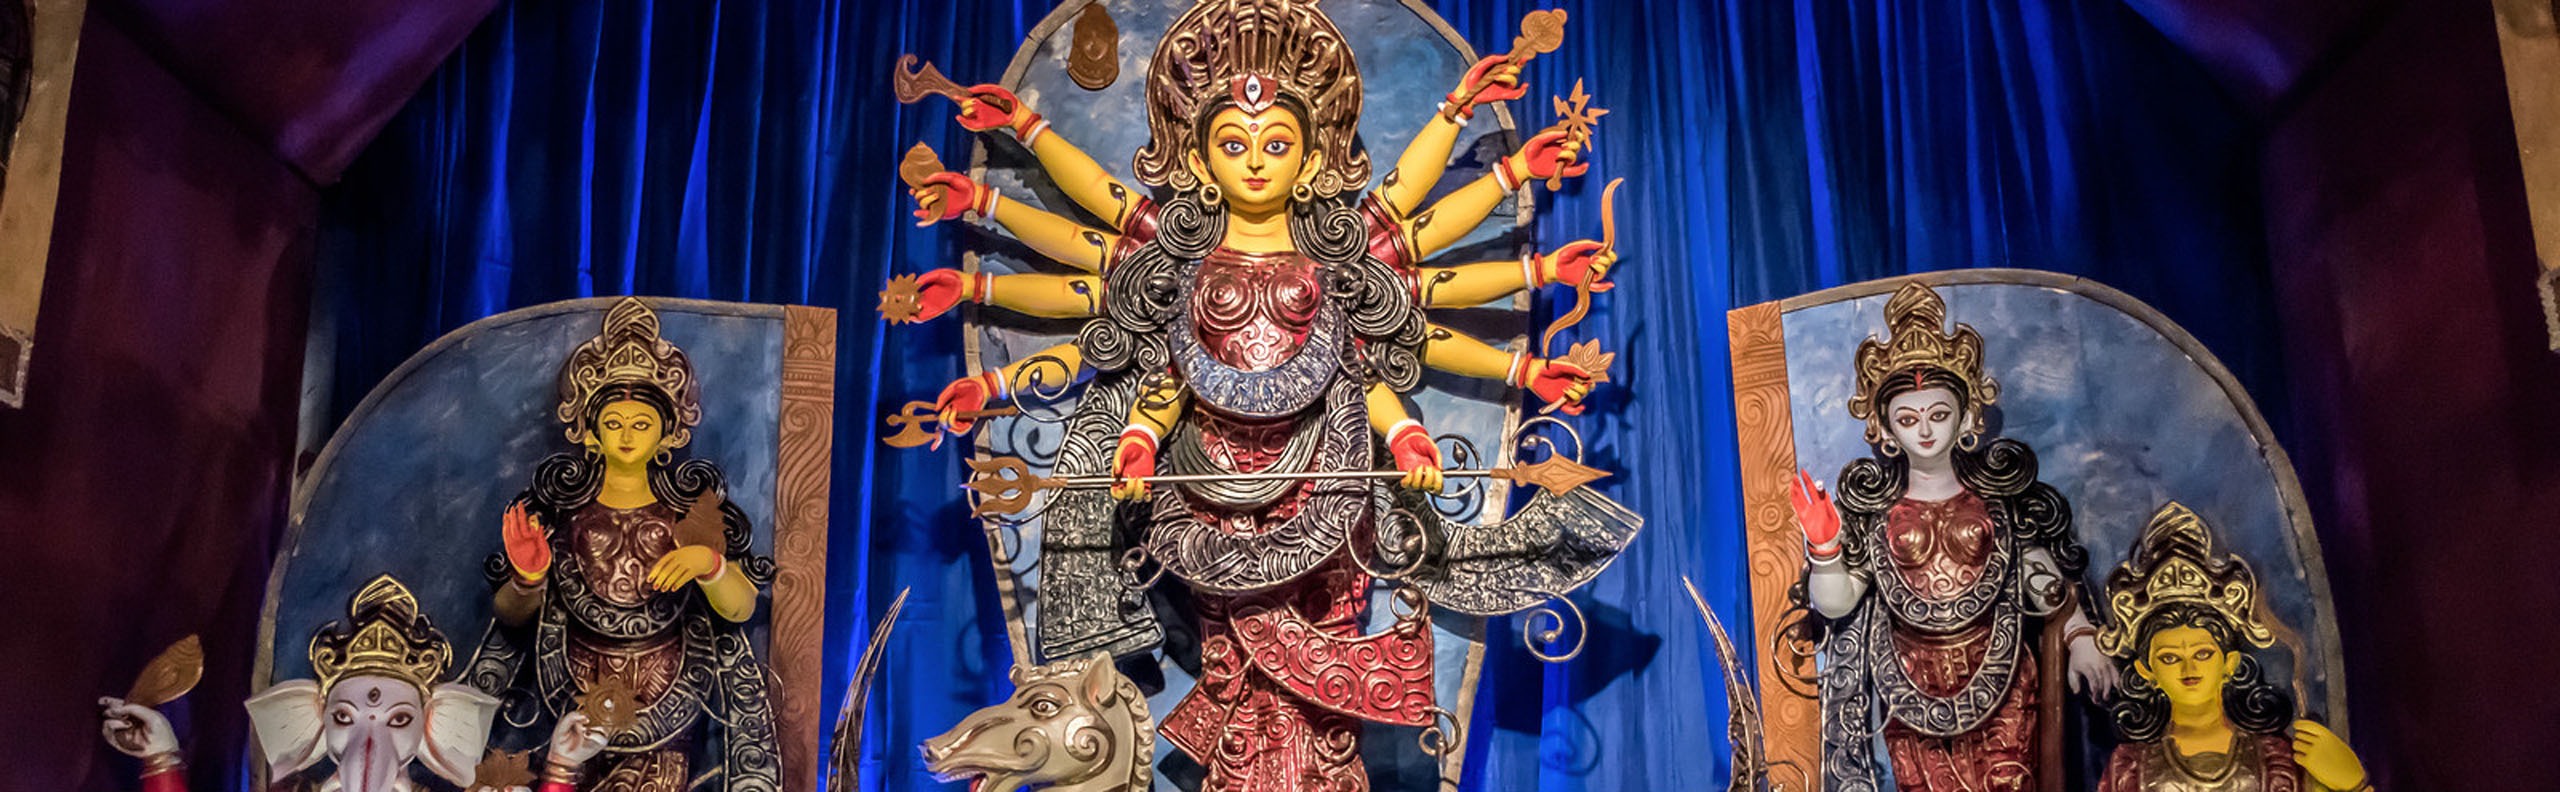 Durga Puja Festival- Durga Puja Dates and Celebrations 